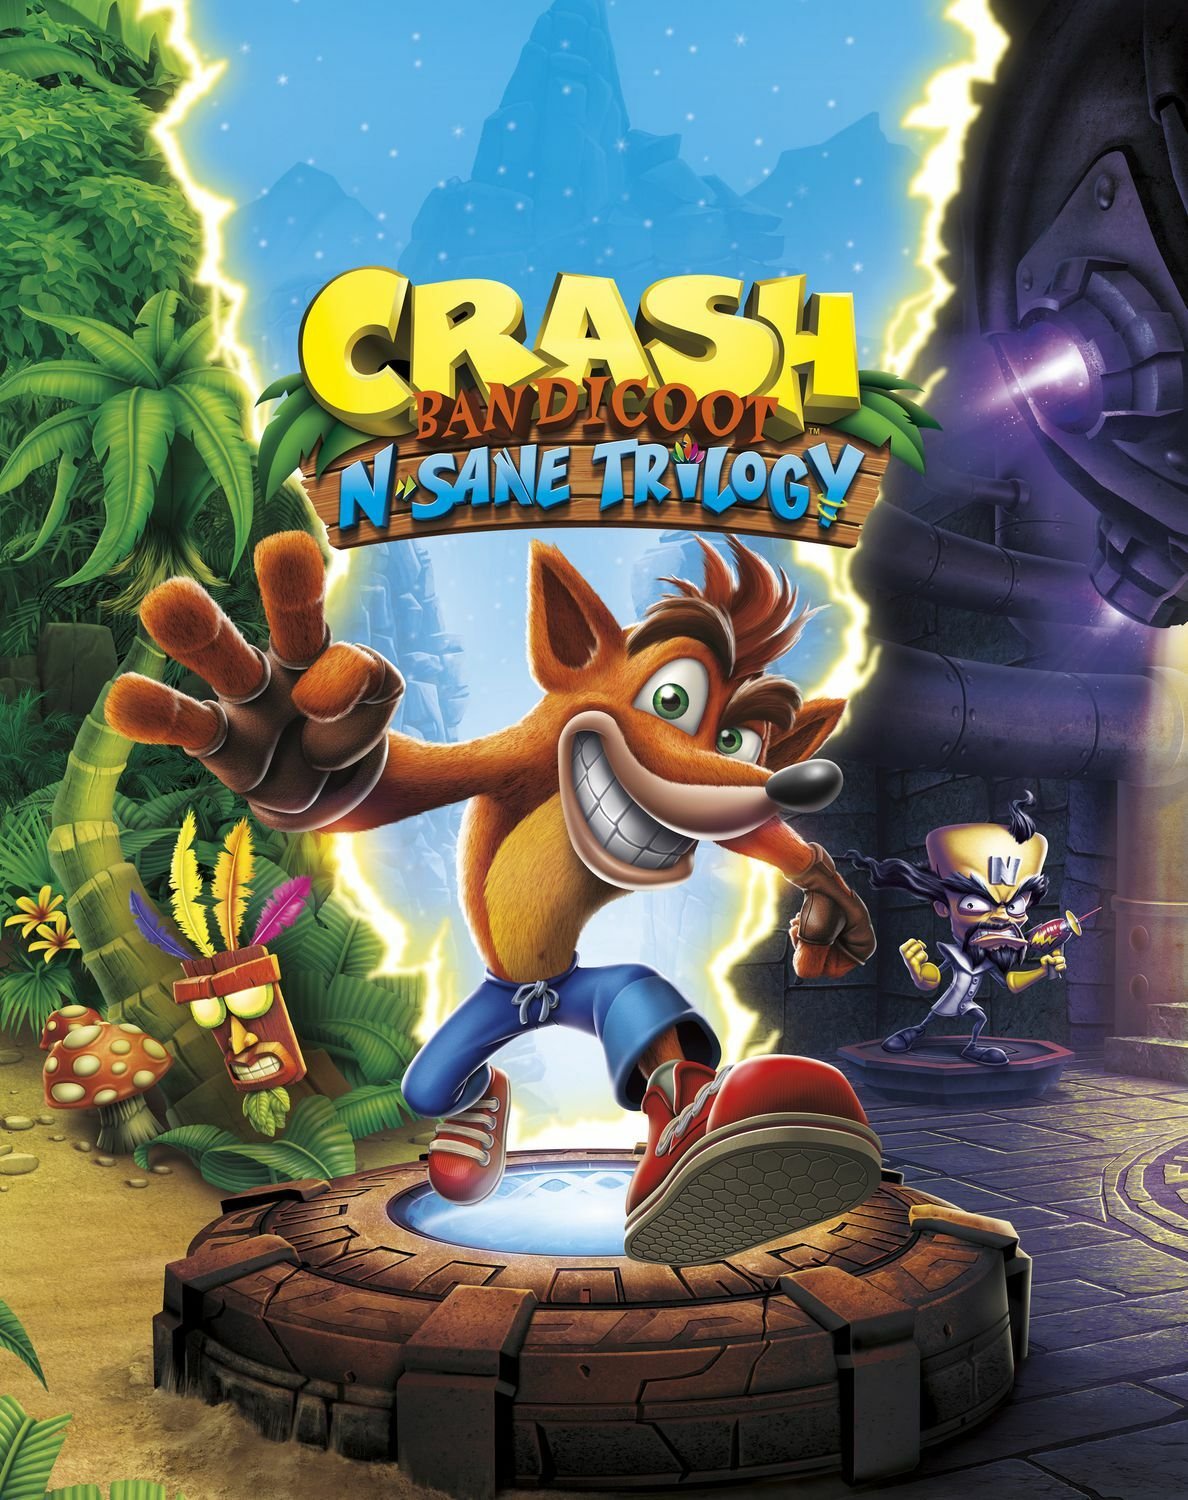 Crash Bandicoot N.Sane Trilogy è disponibile su PS4